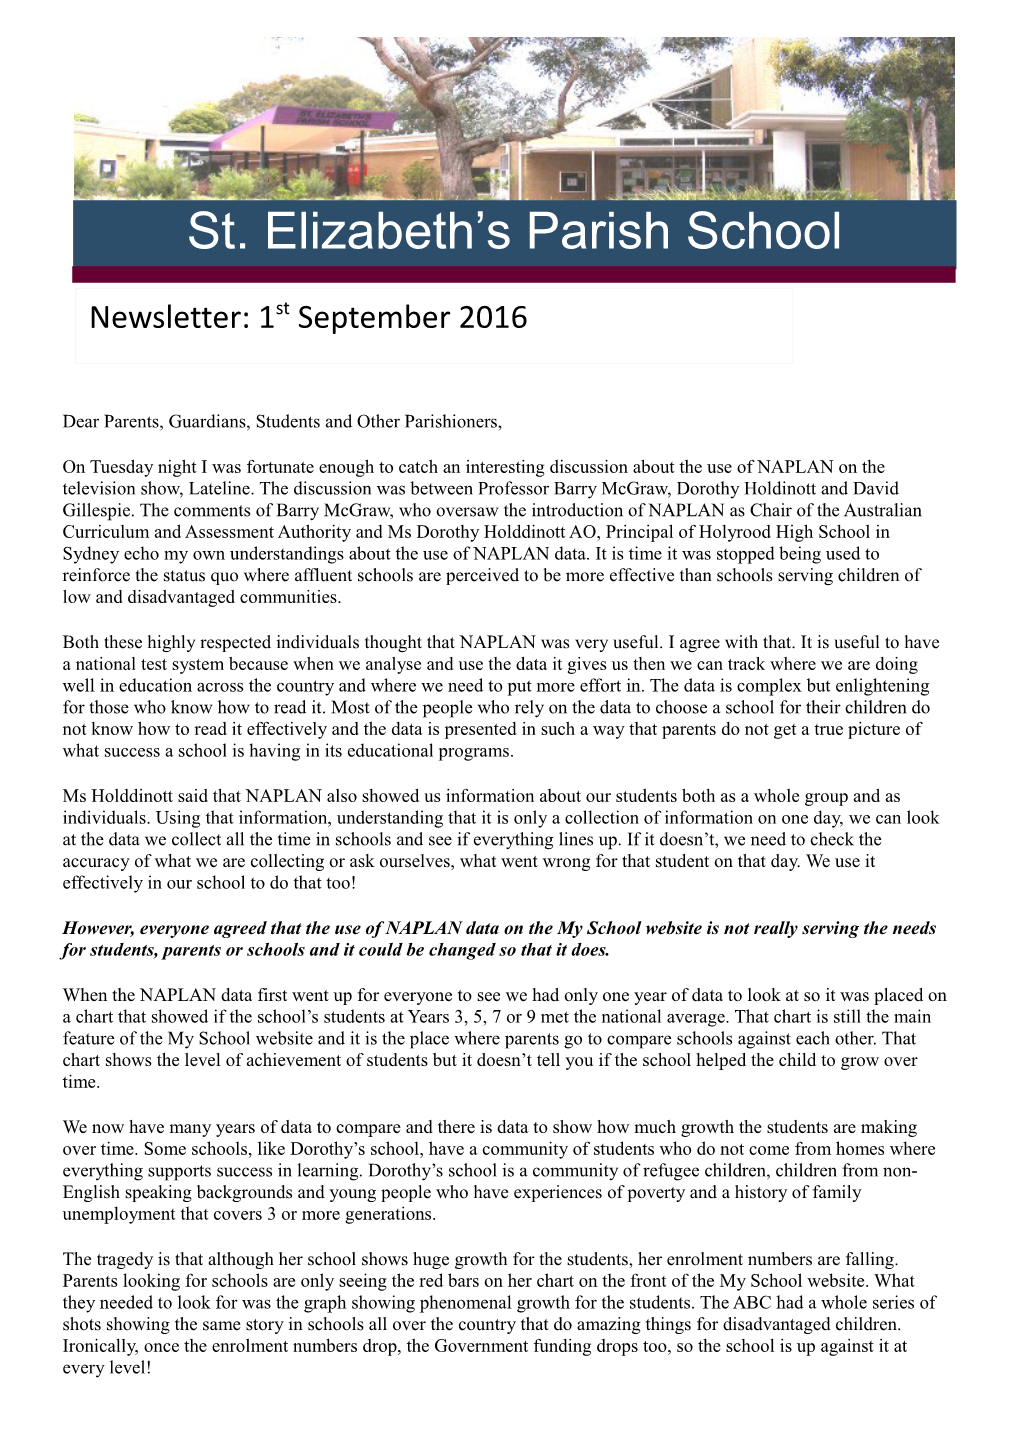 Dear Parents, Guardians, Students and Other Parishioners s1